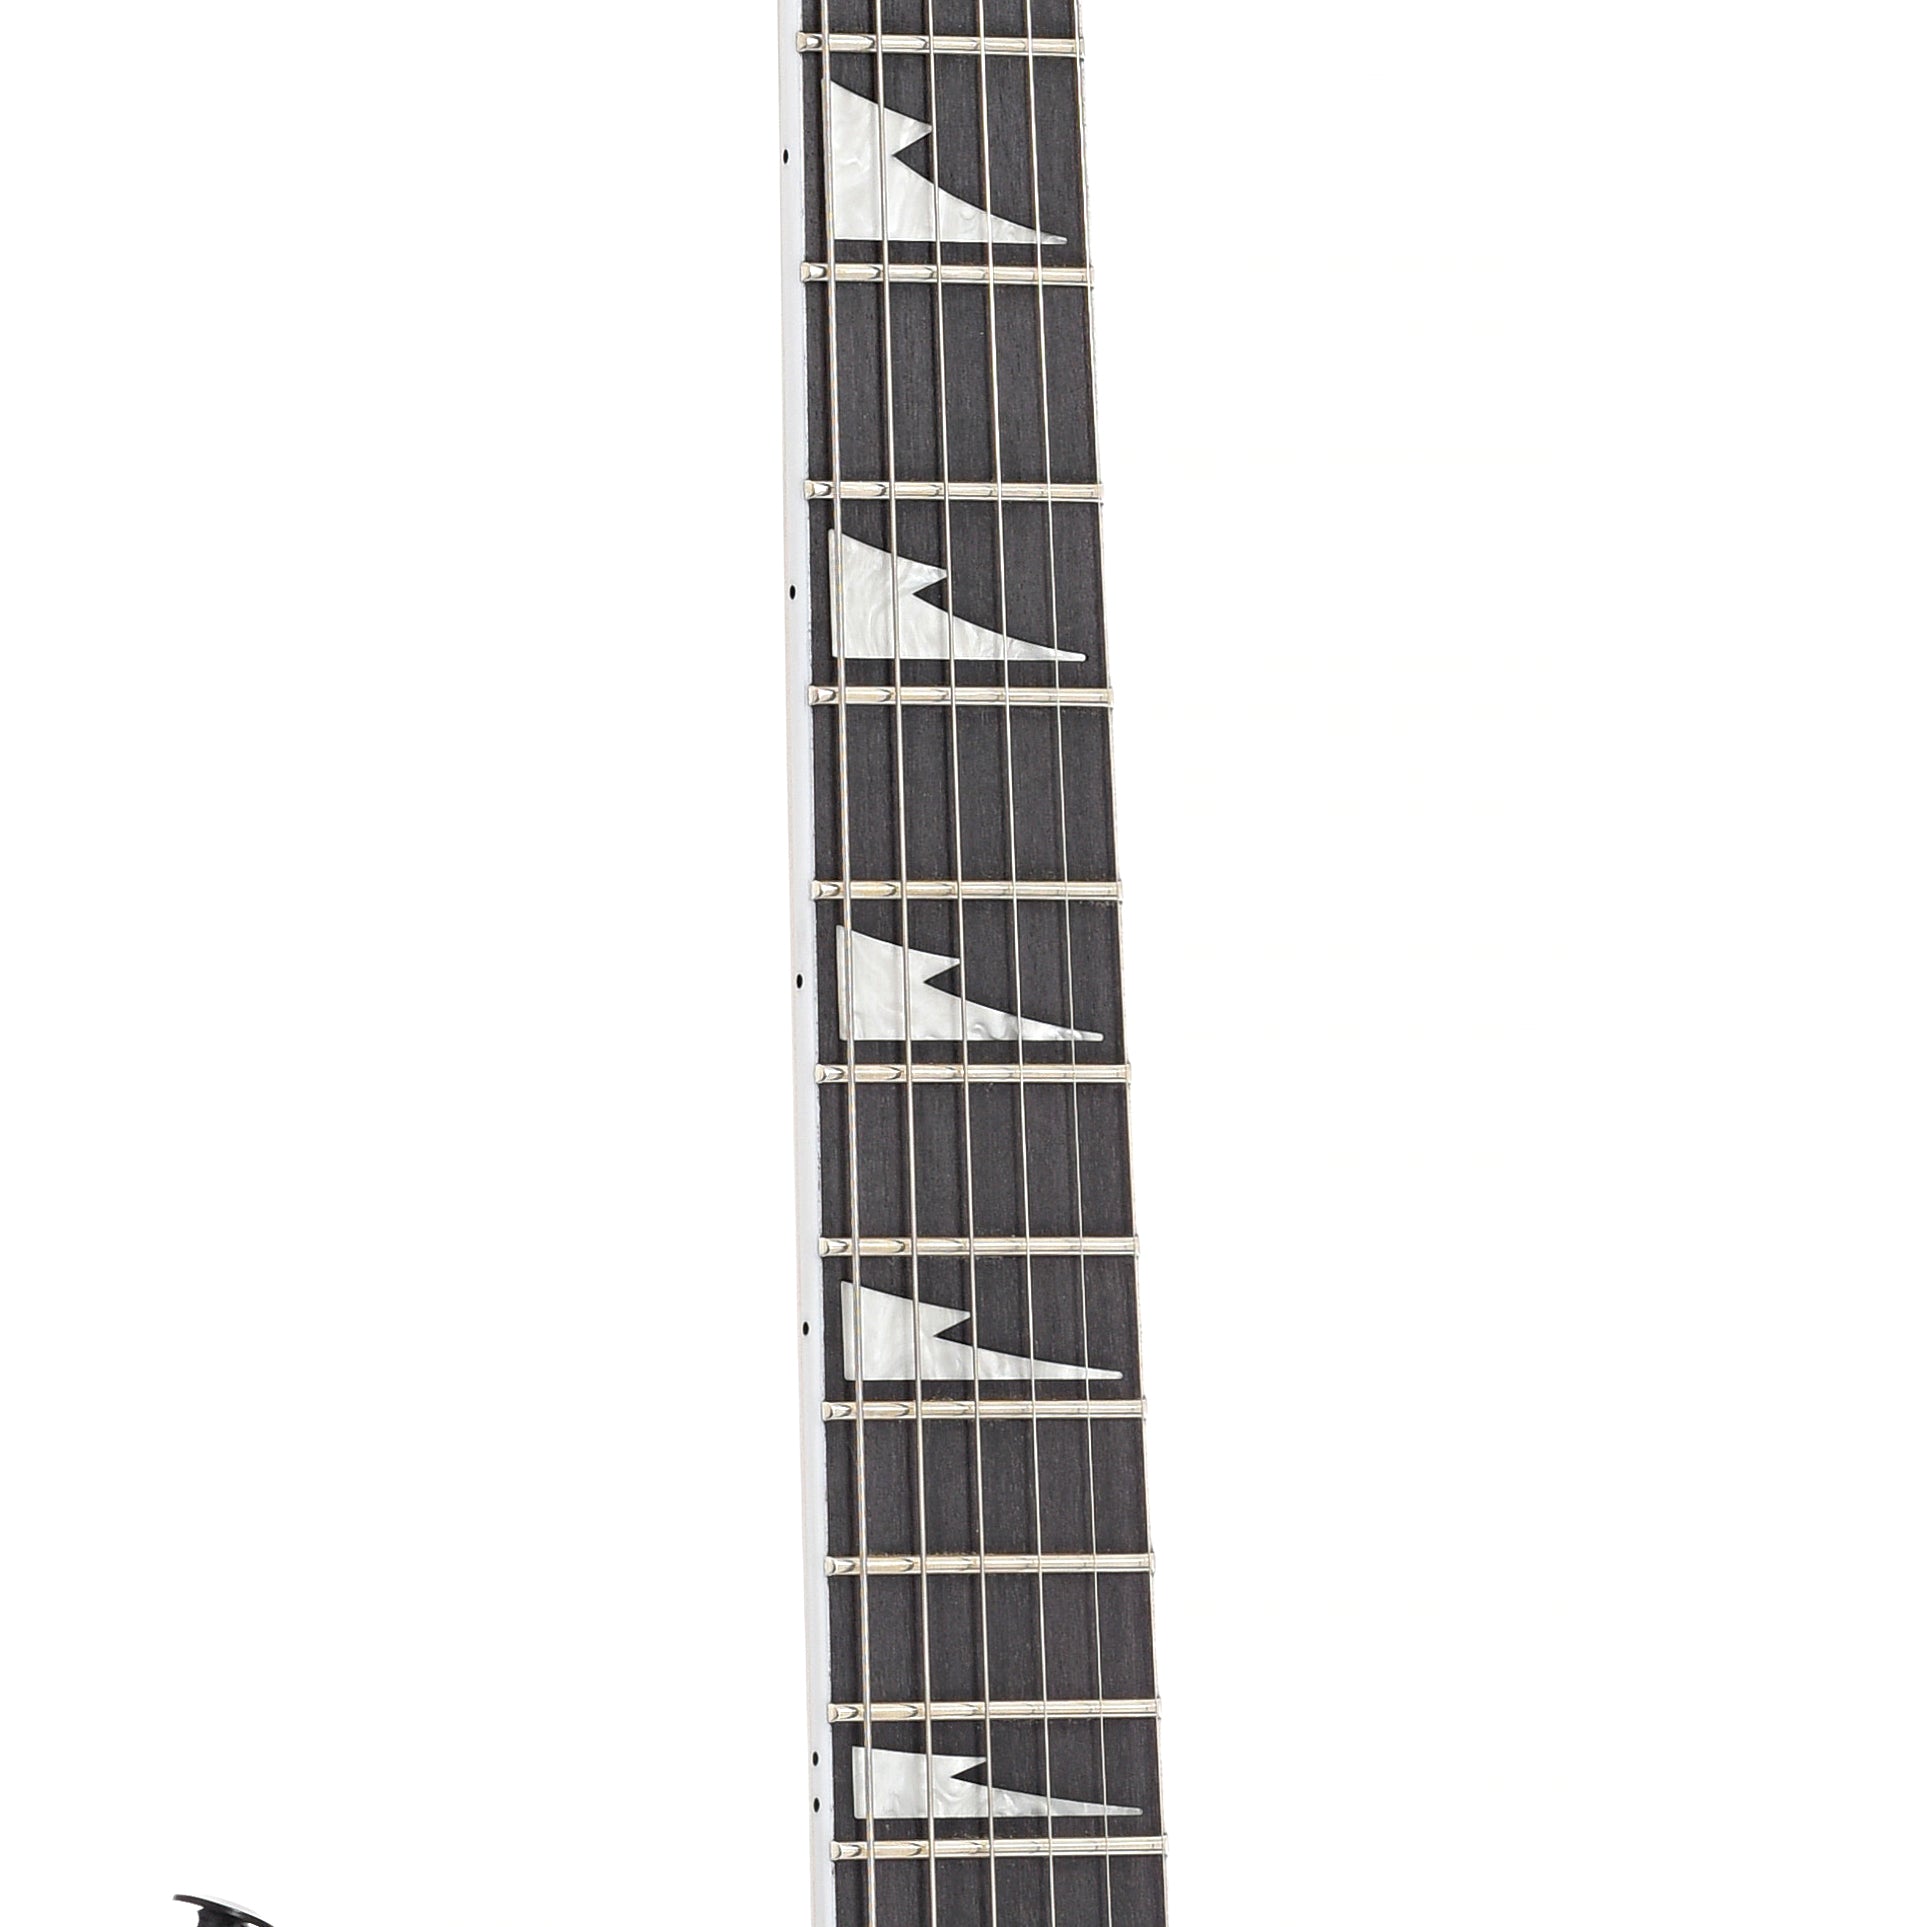 Fretboard of Ibanez Gio GRG320FA Electric Guitar, Transparent Red Burst